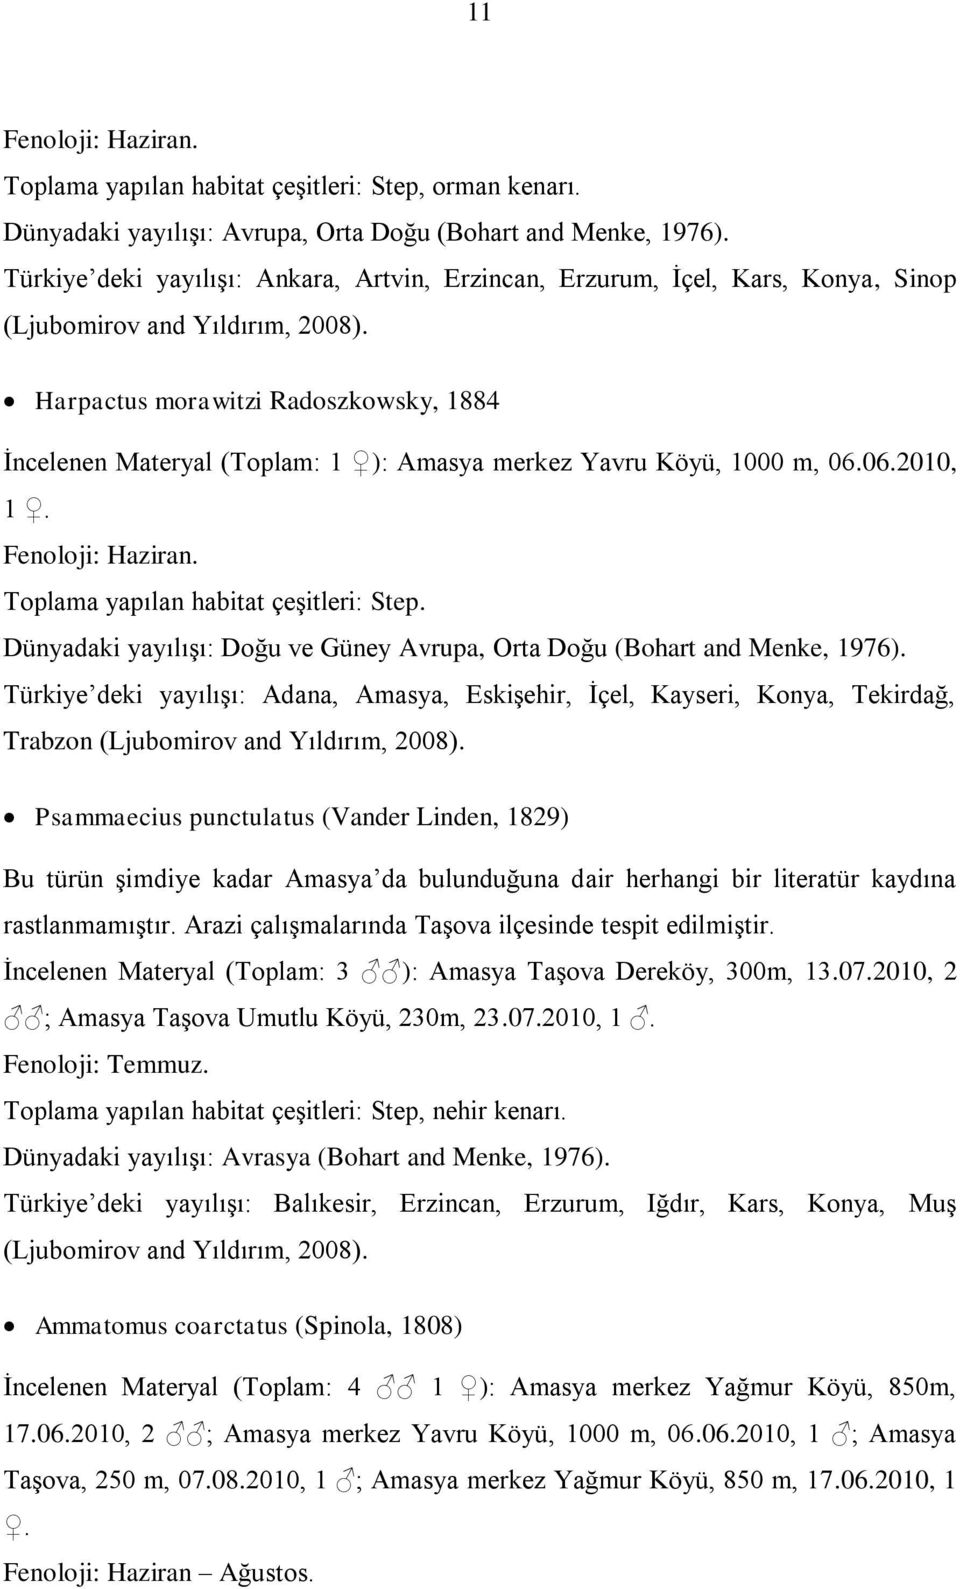 Harpactus morawitzi Radoszkowsky, 1884 İncelenen Materyal (Toplam: 1 ): Amasya merkez Yavru Köyü, 1000 m, 06.06.2010, 1. Fenoloji: Haziran.